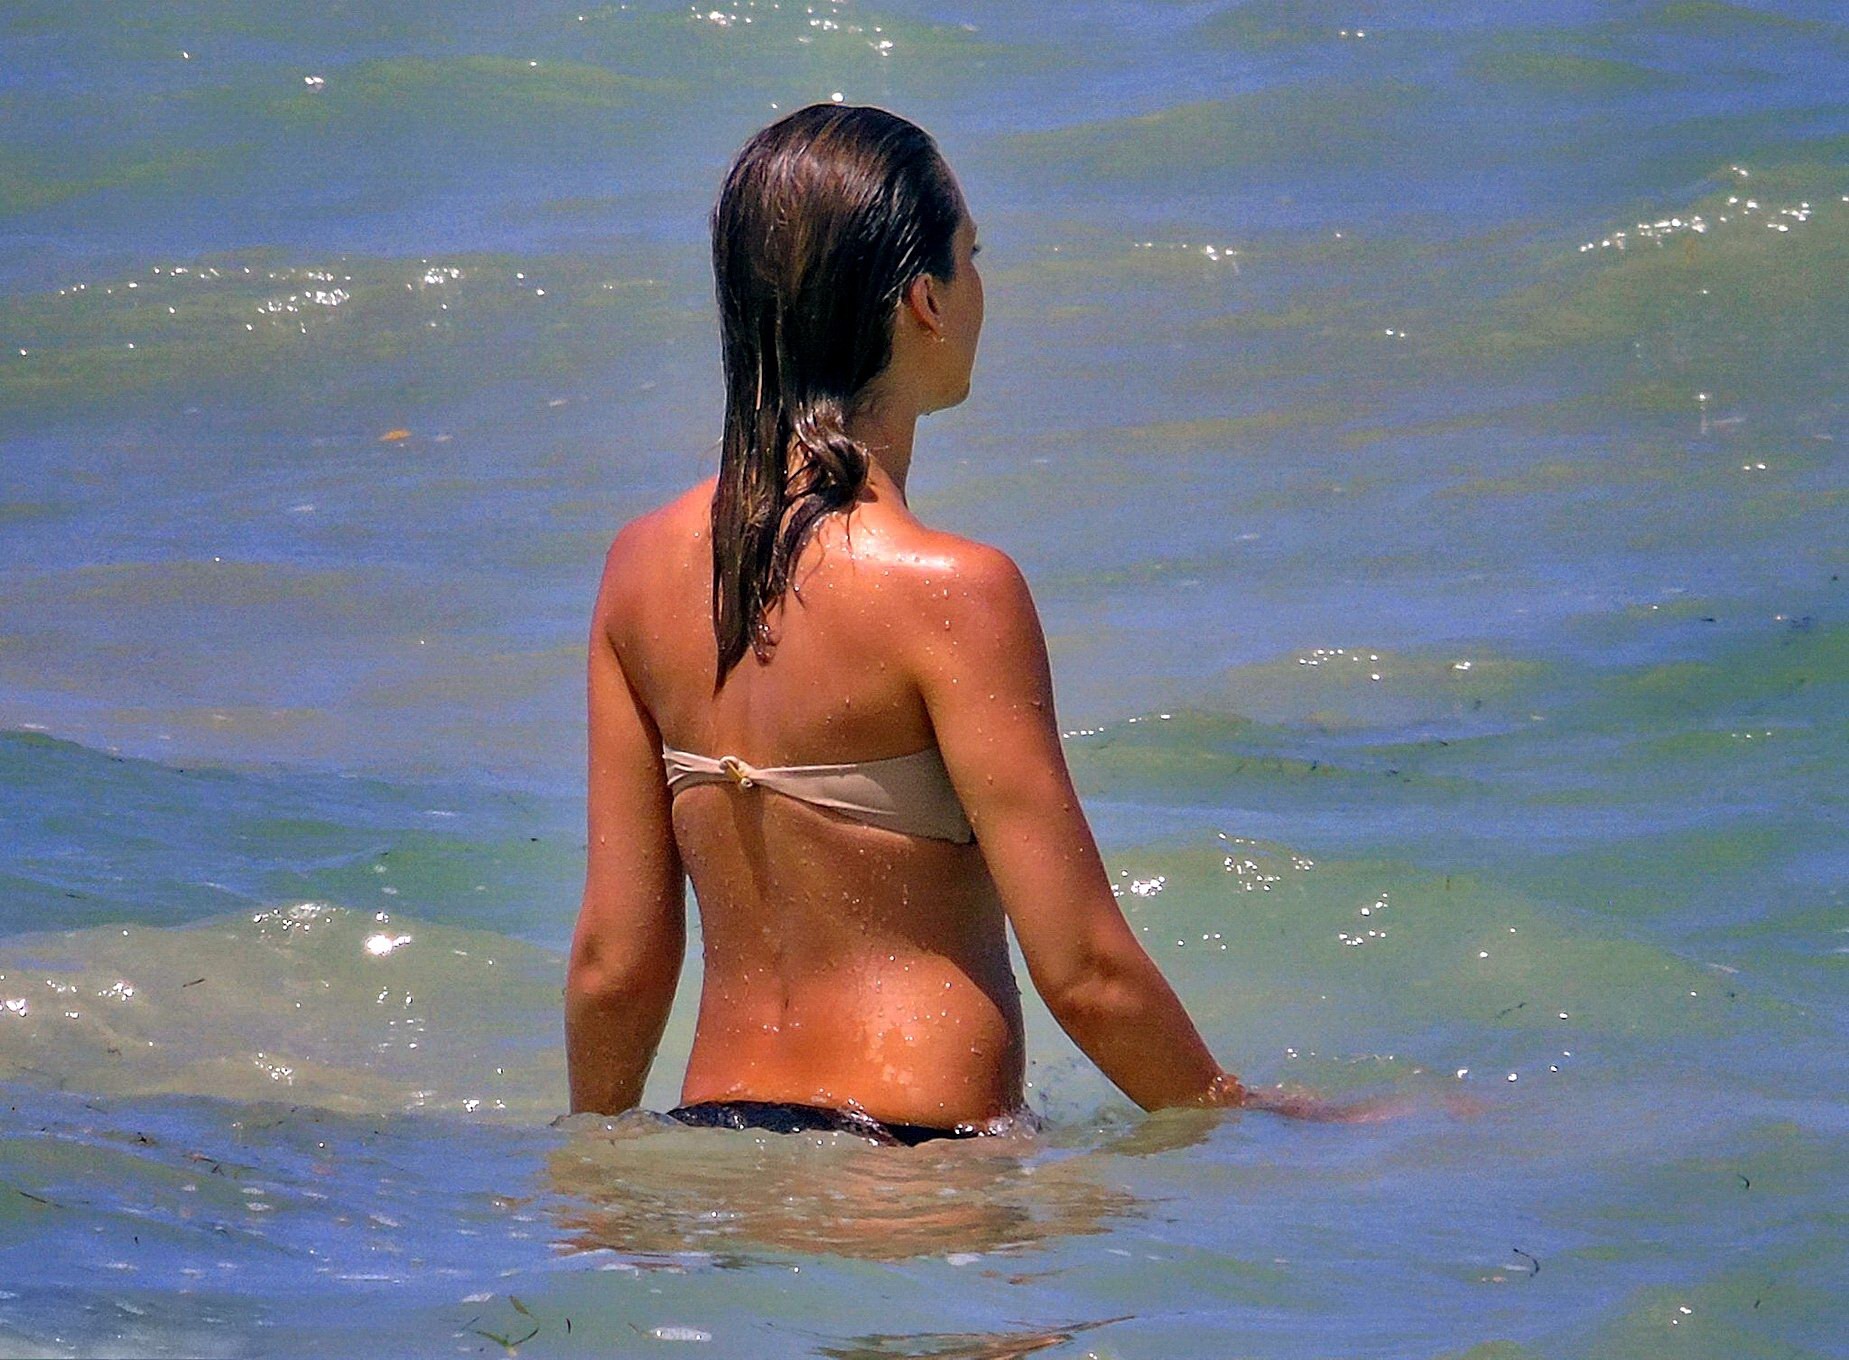 Jessica Alba wearing a strapless bikini on a beach in Mexico #75191505